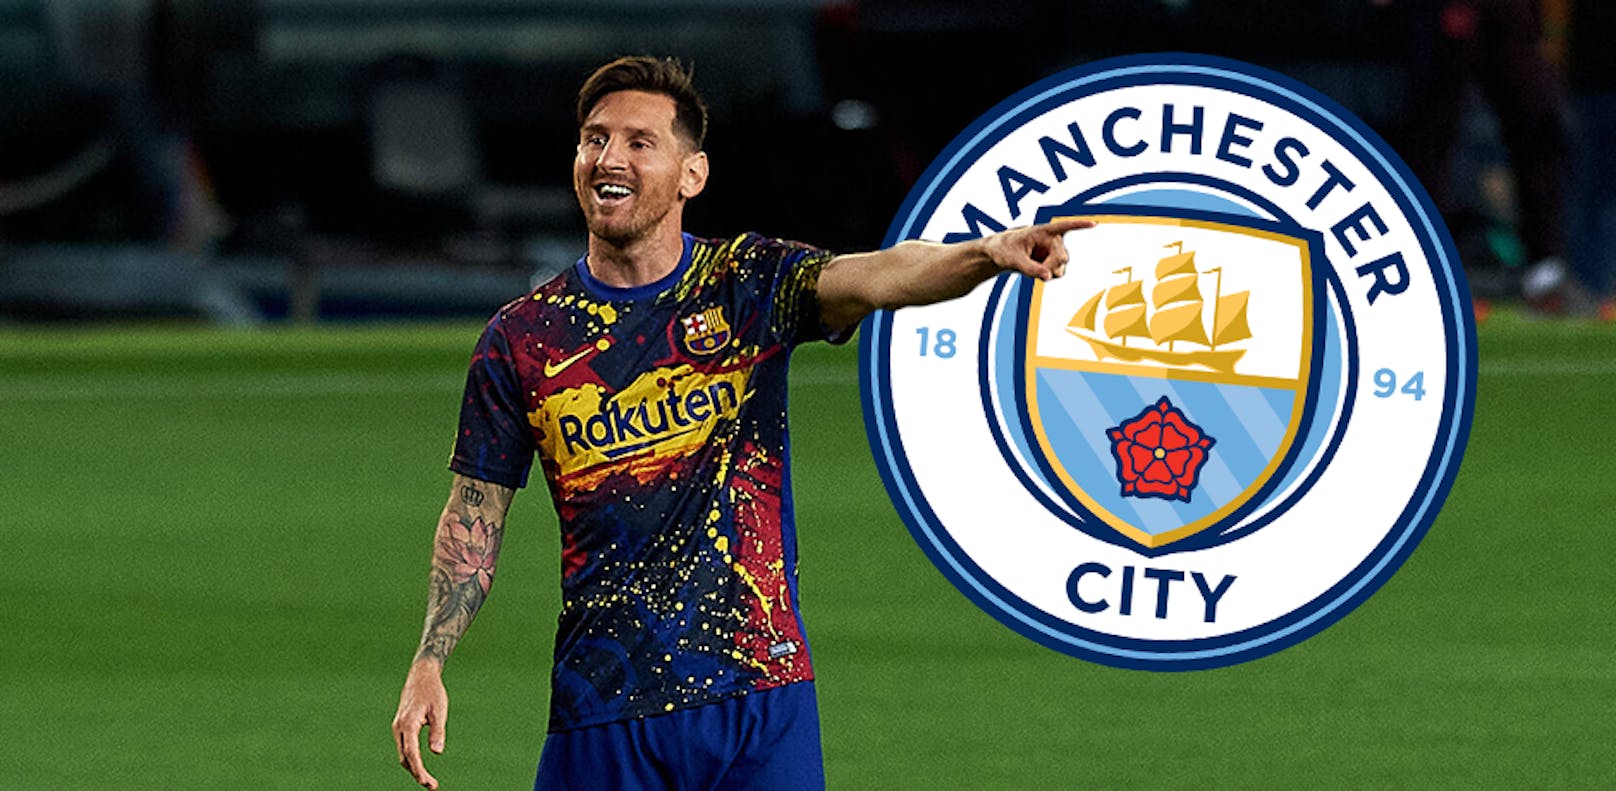 Kickt Lionel Messi bald in der Premier League?